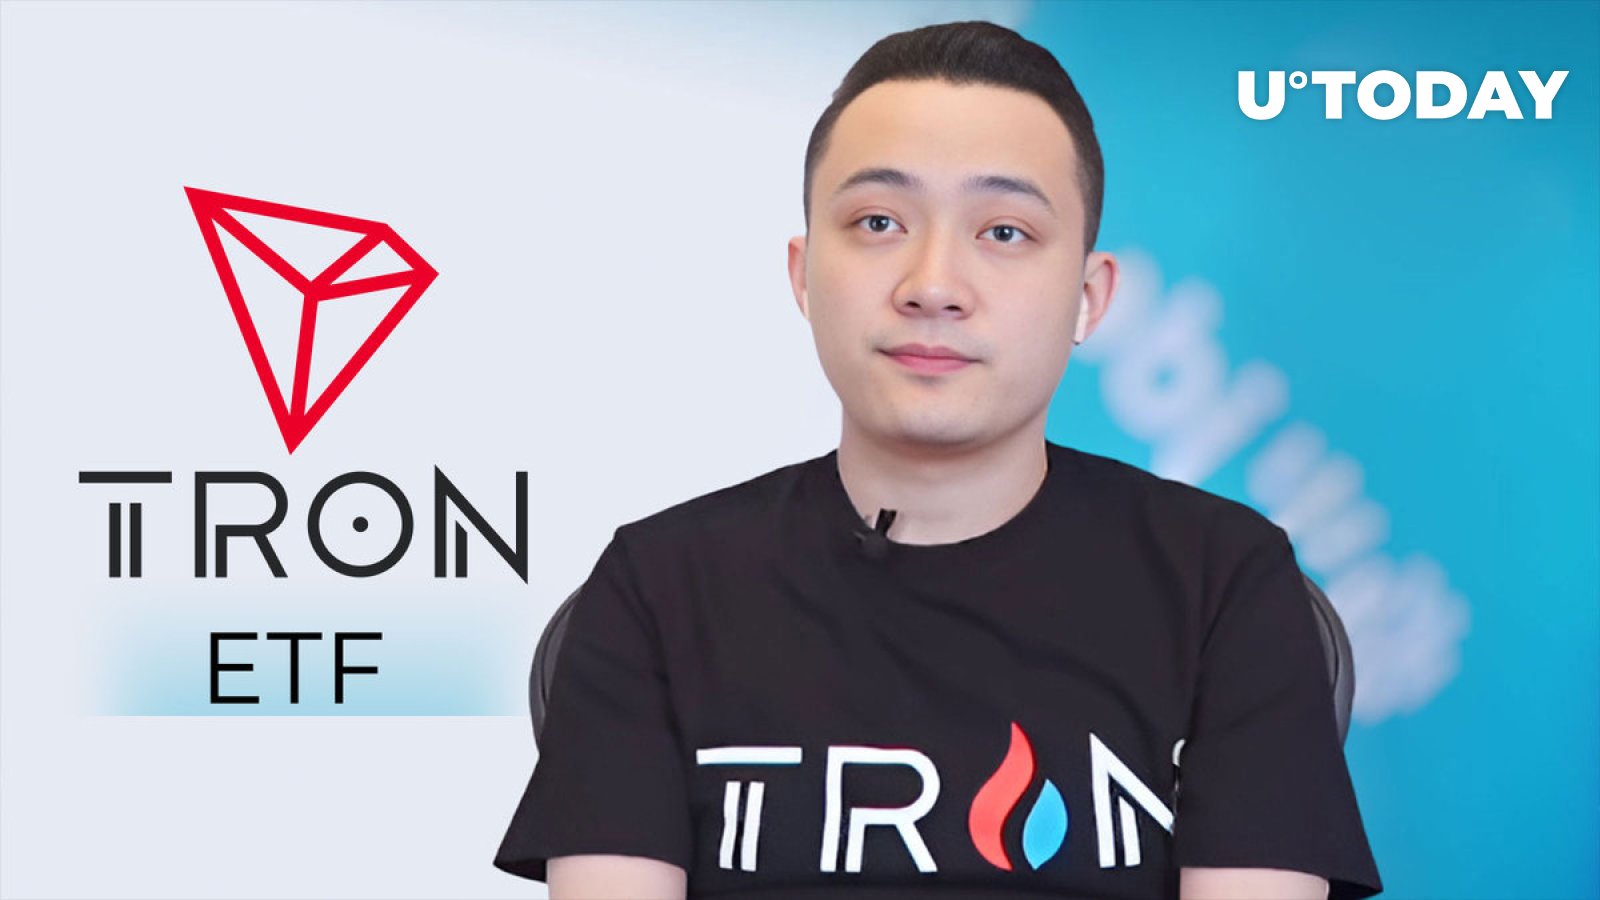 Tron创始人Justin Sun发布TRX ETF帖子引发社区兴趣